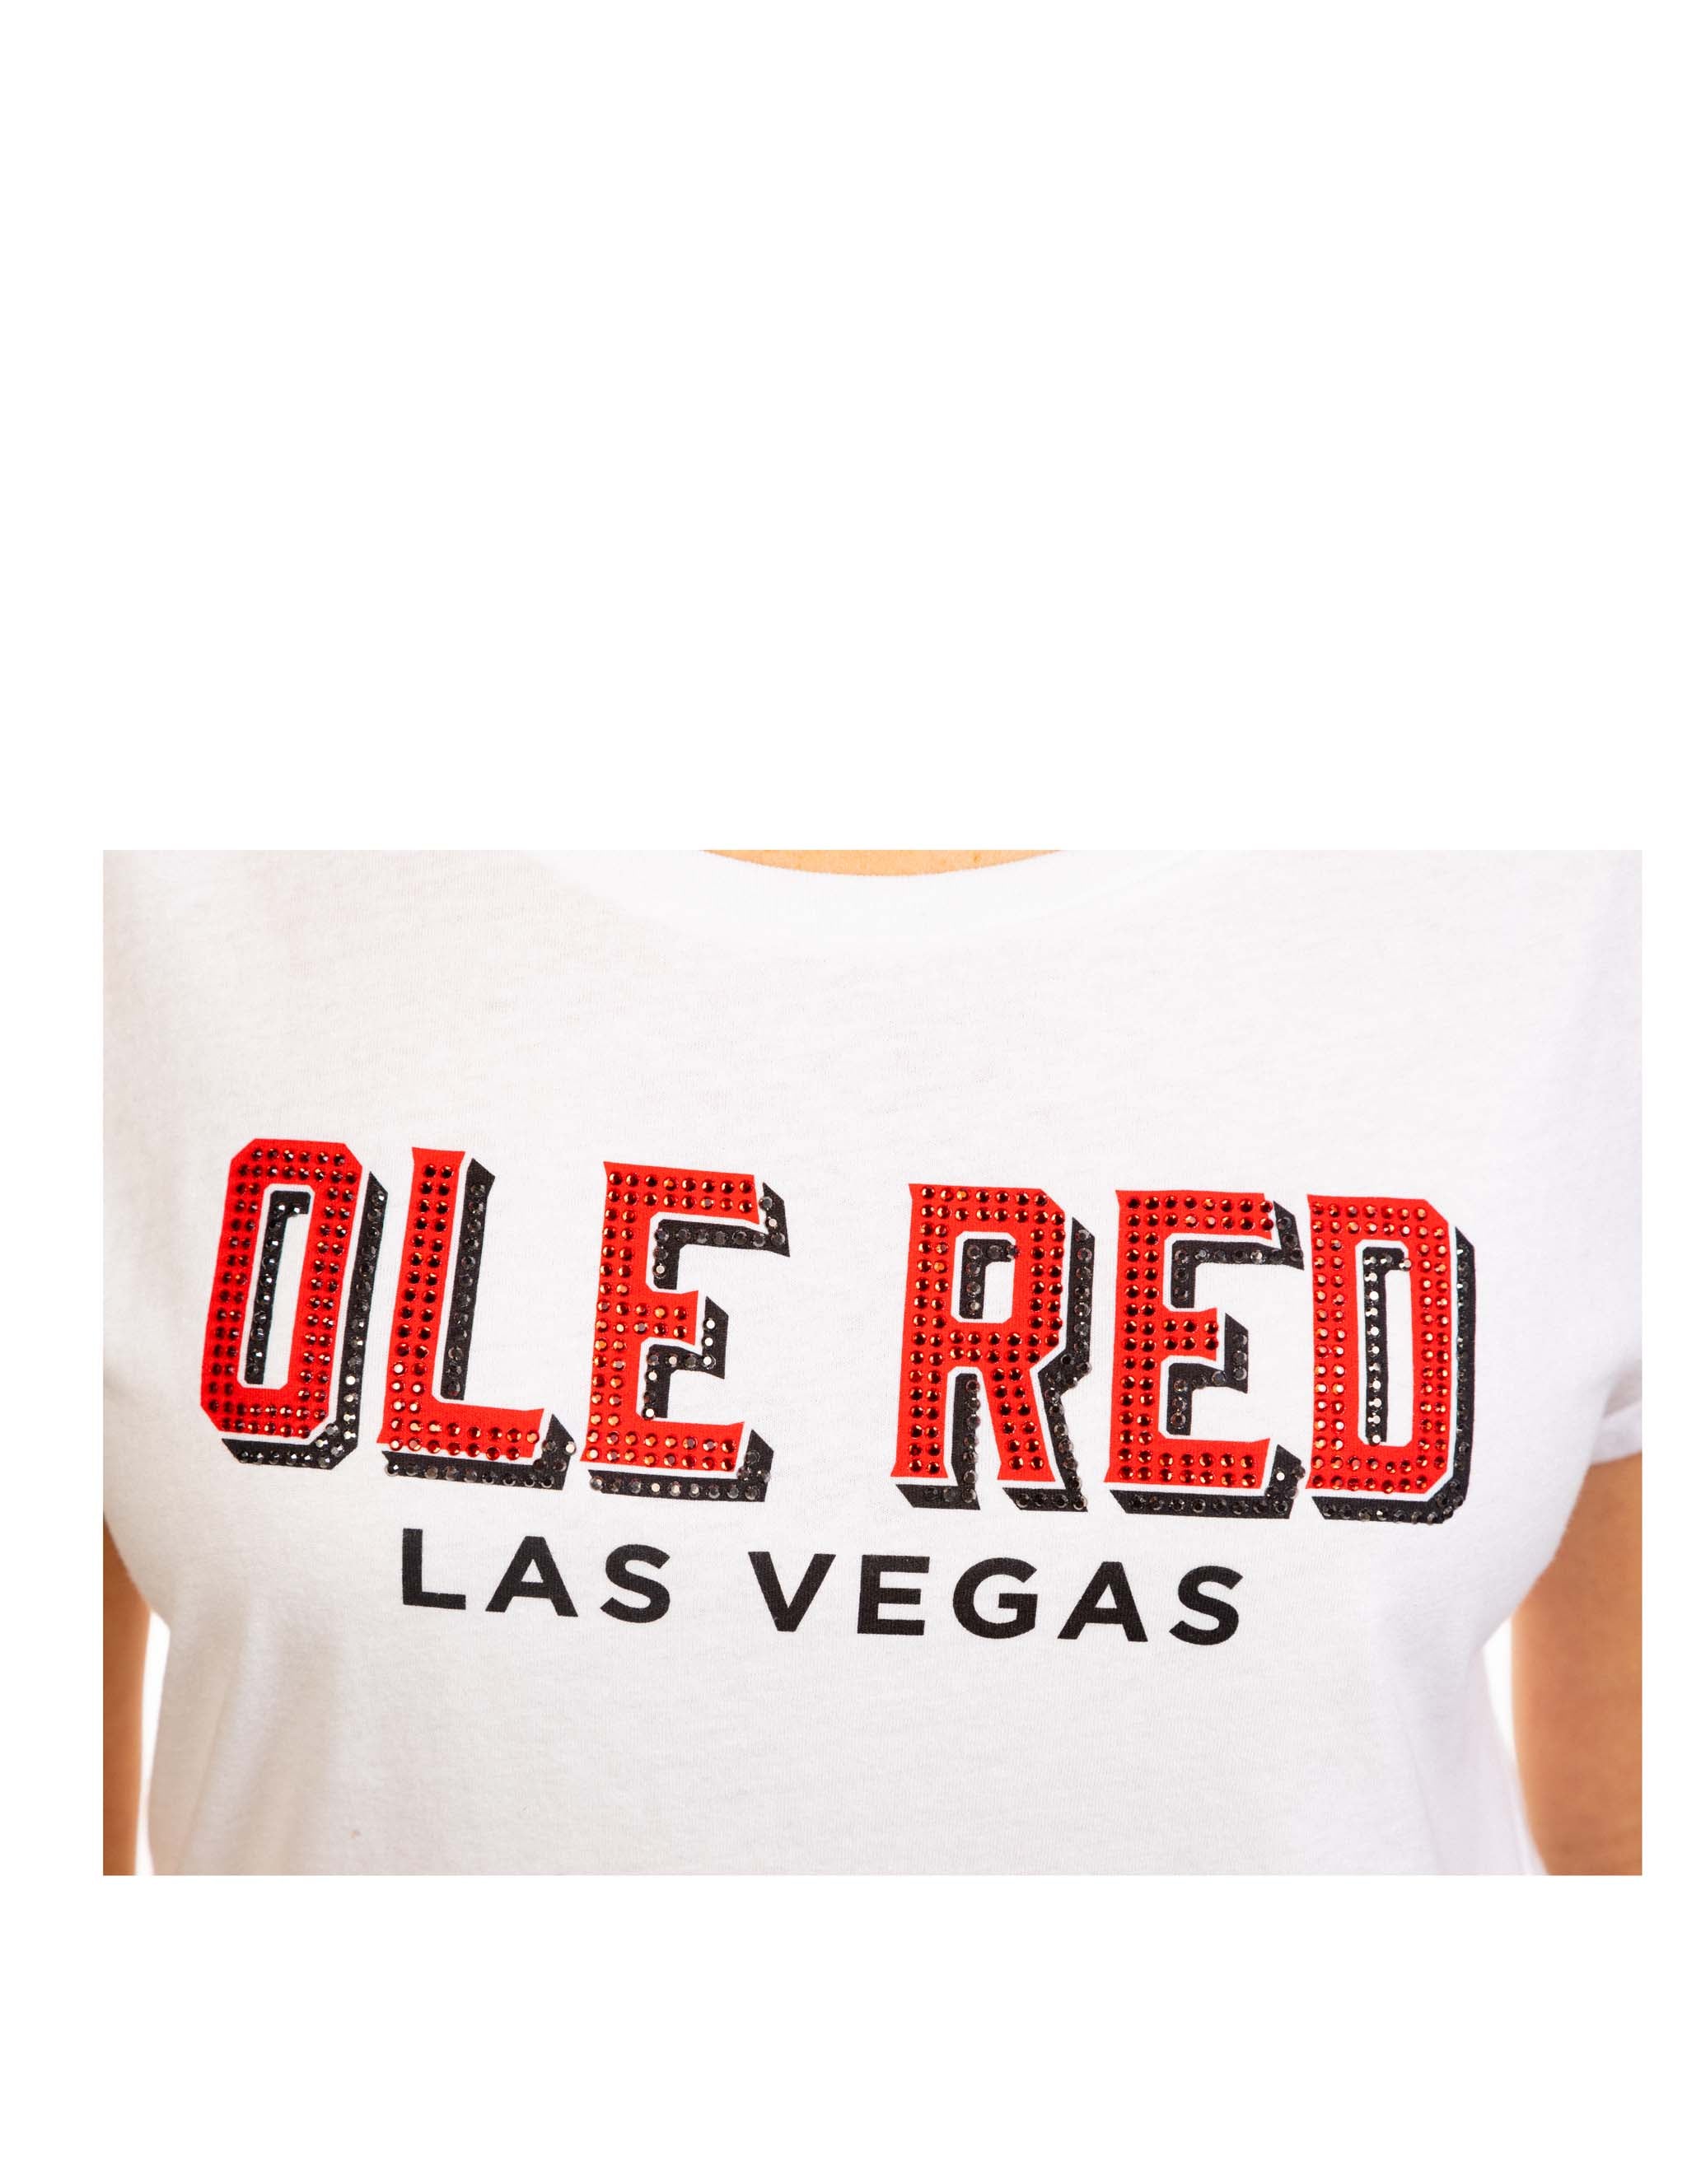 Ole Red Vegas Red Rhinestone Bling T-Shirt